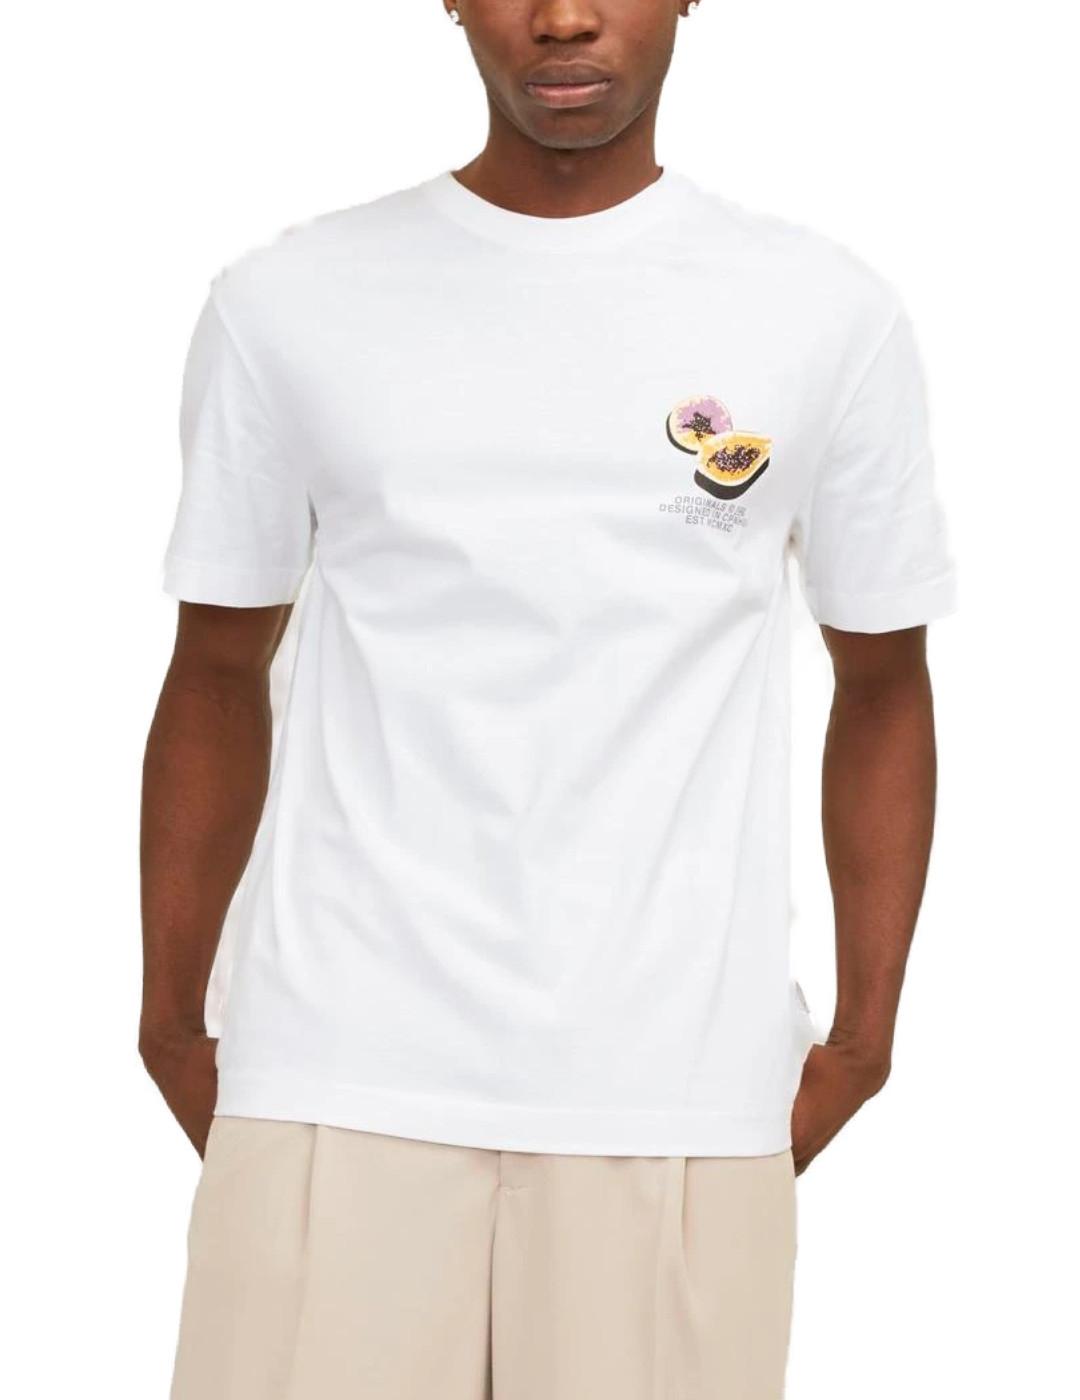 Camiseta Jack&Jones Tampa blanco manga corta para hombre